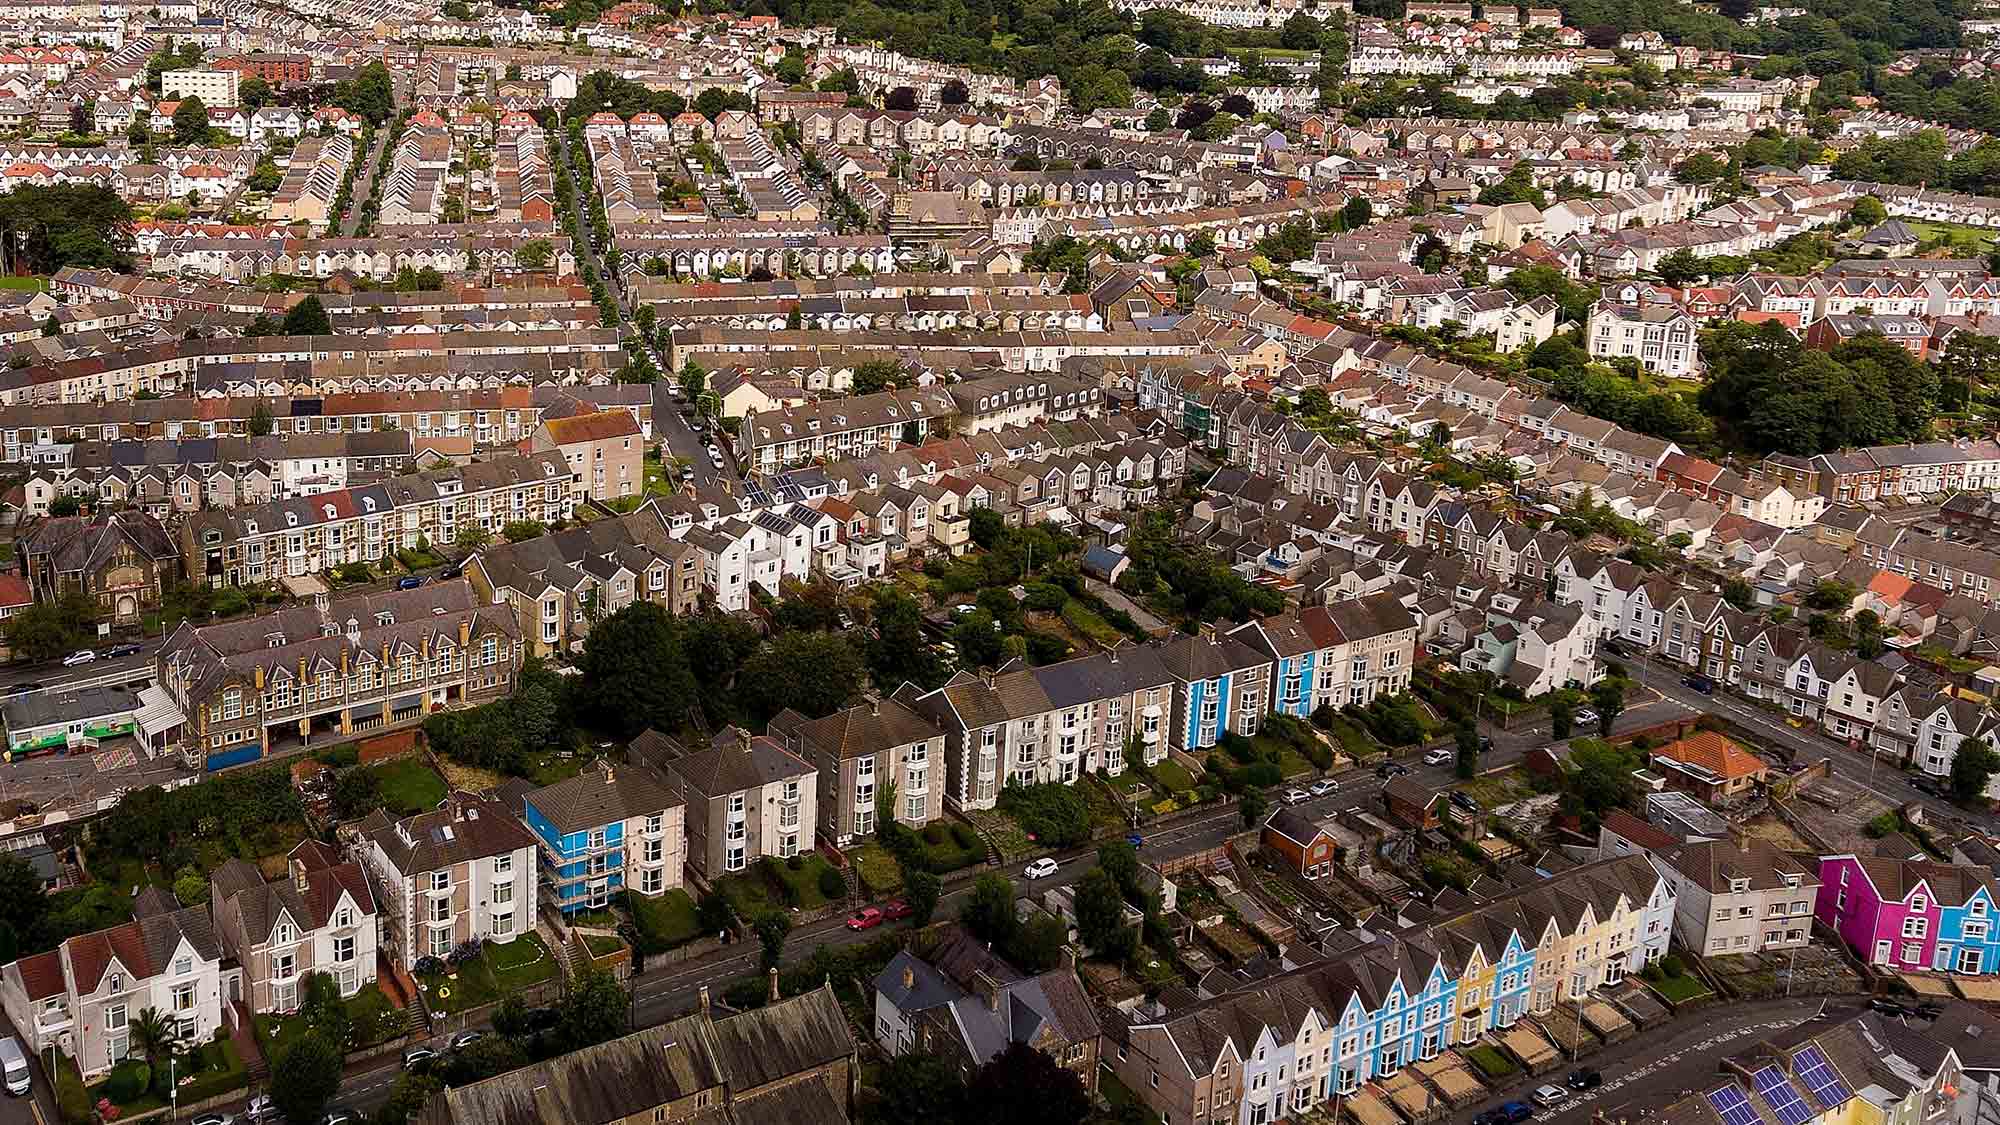 Aerial view of housing in UK